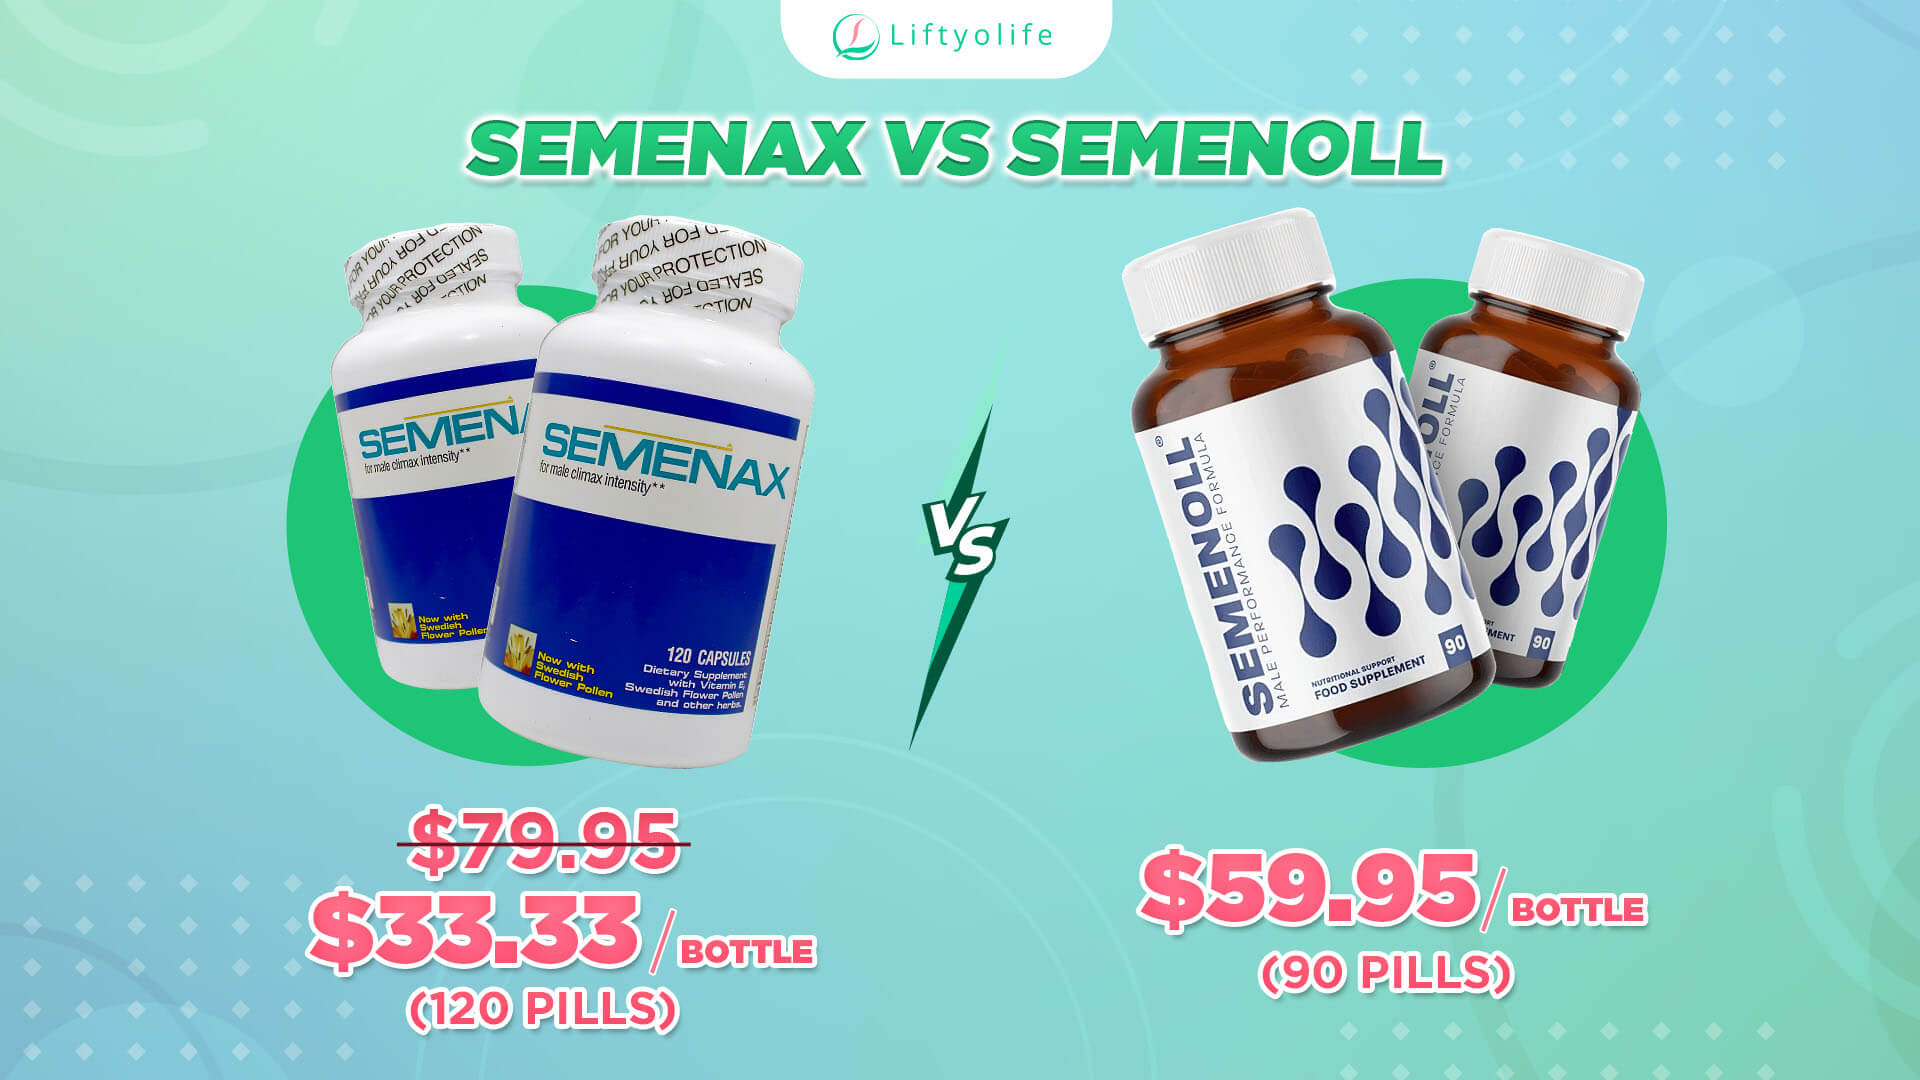 Semenax vs Semenoll : The Price